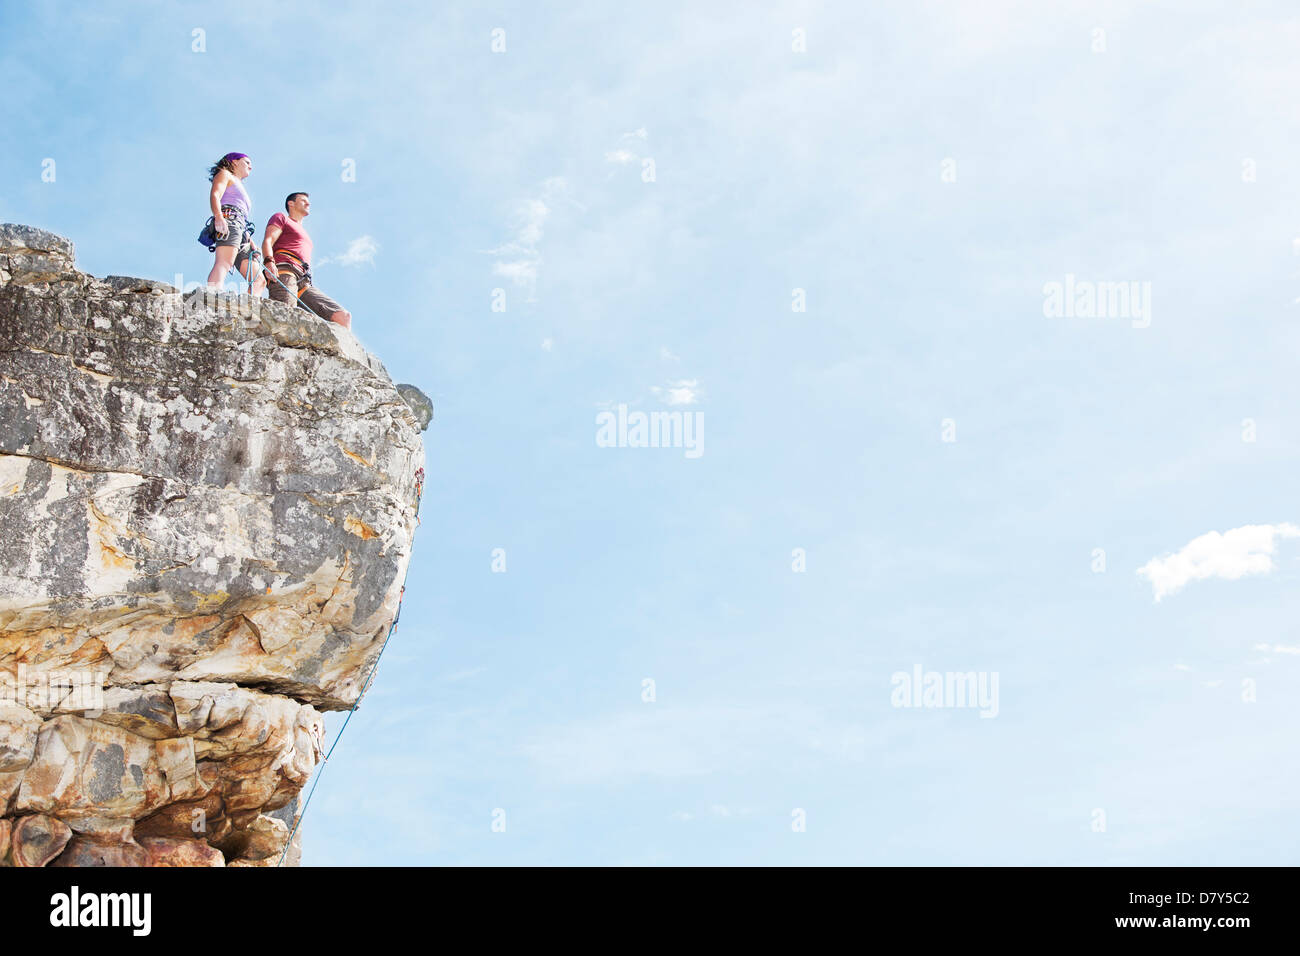 Kletterer auf felsigen Hügel stehend Stockfoto